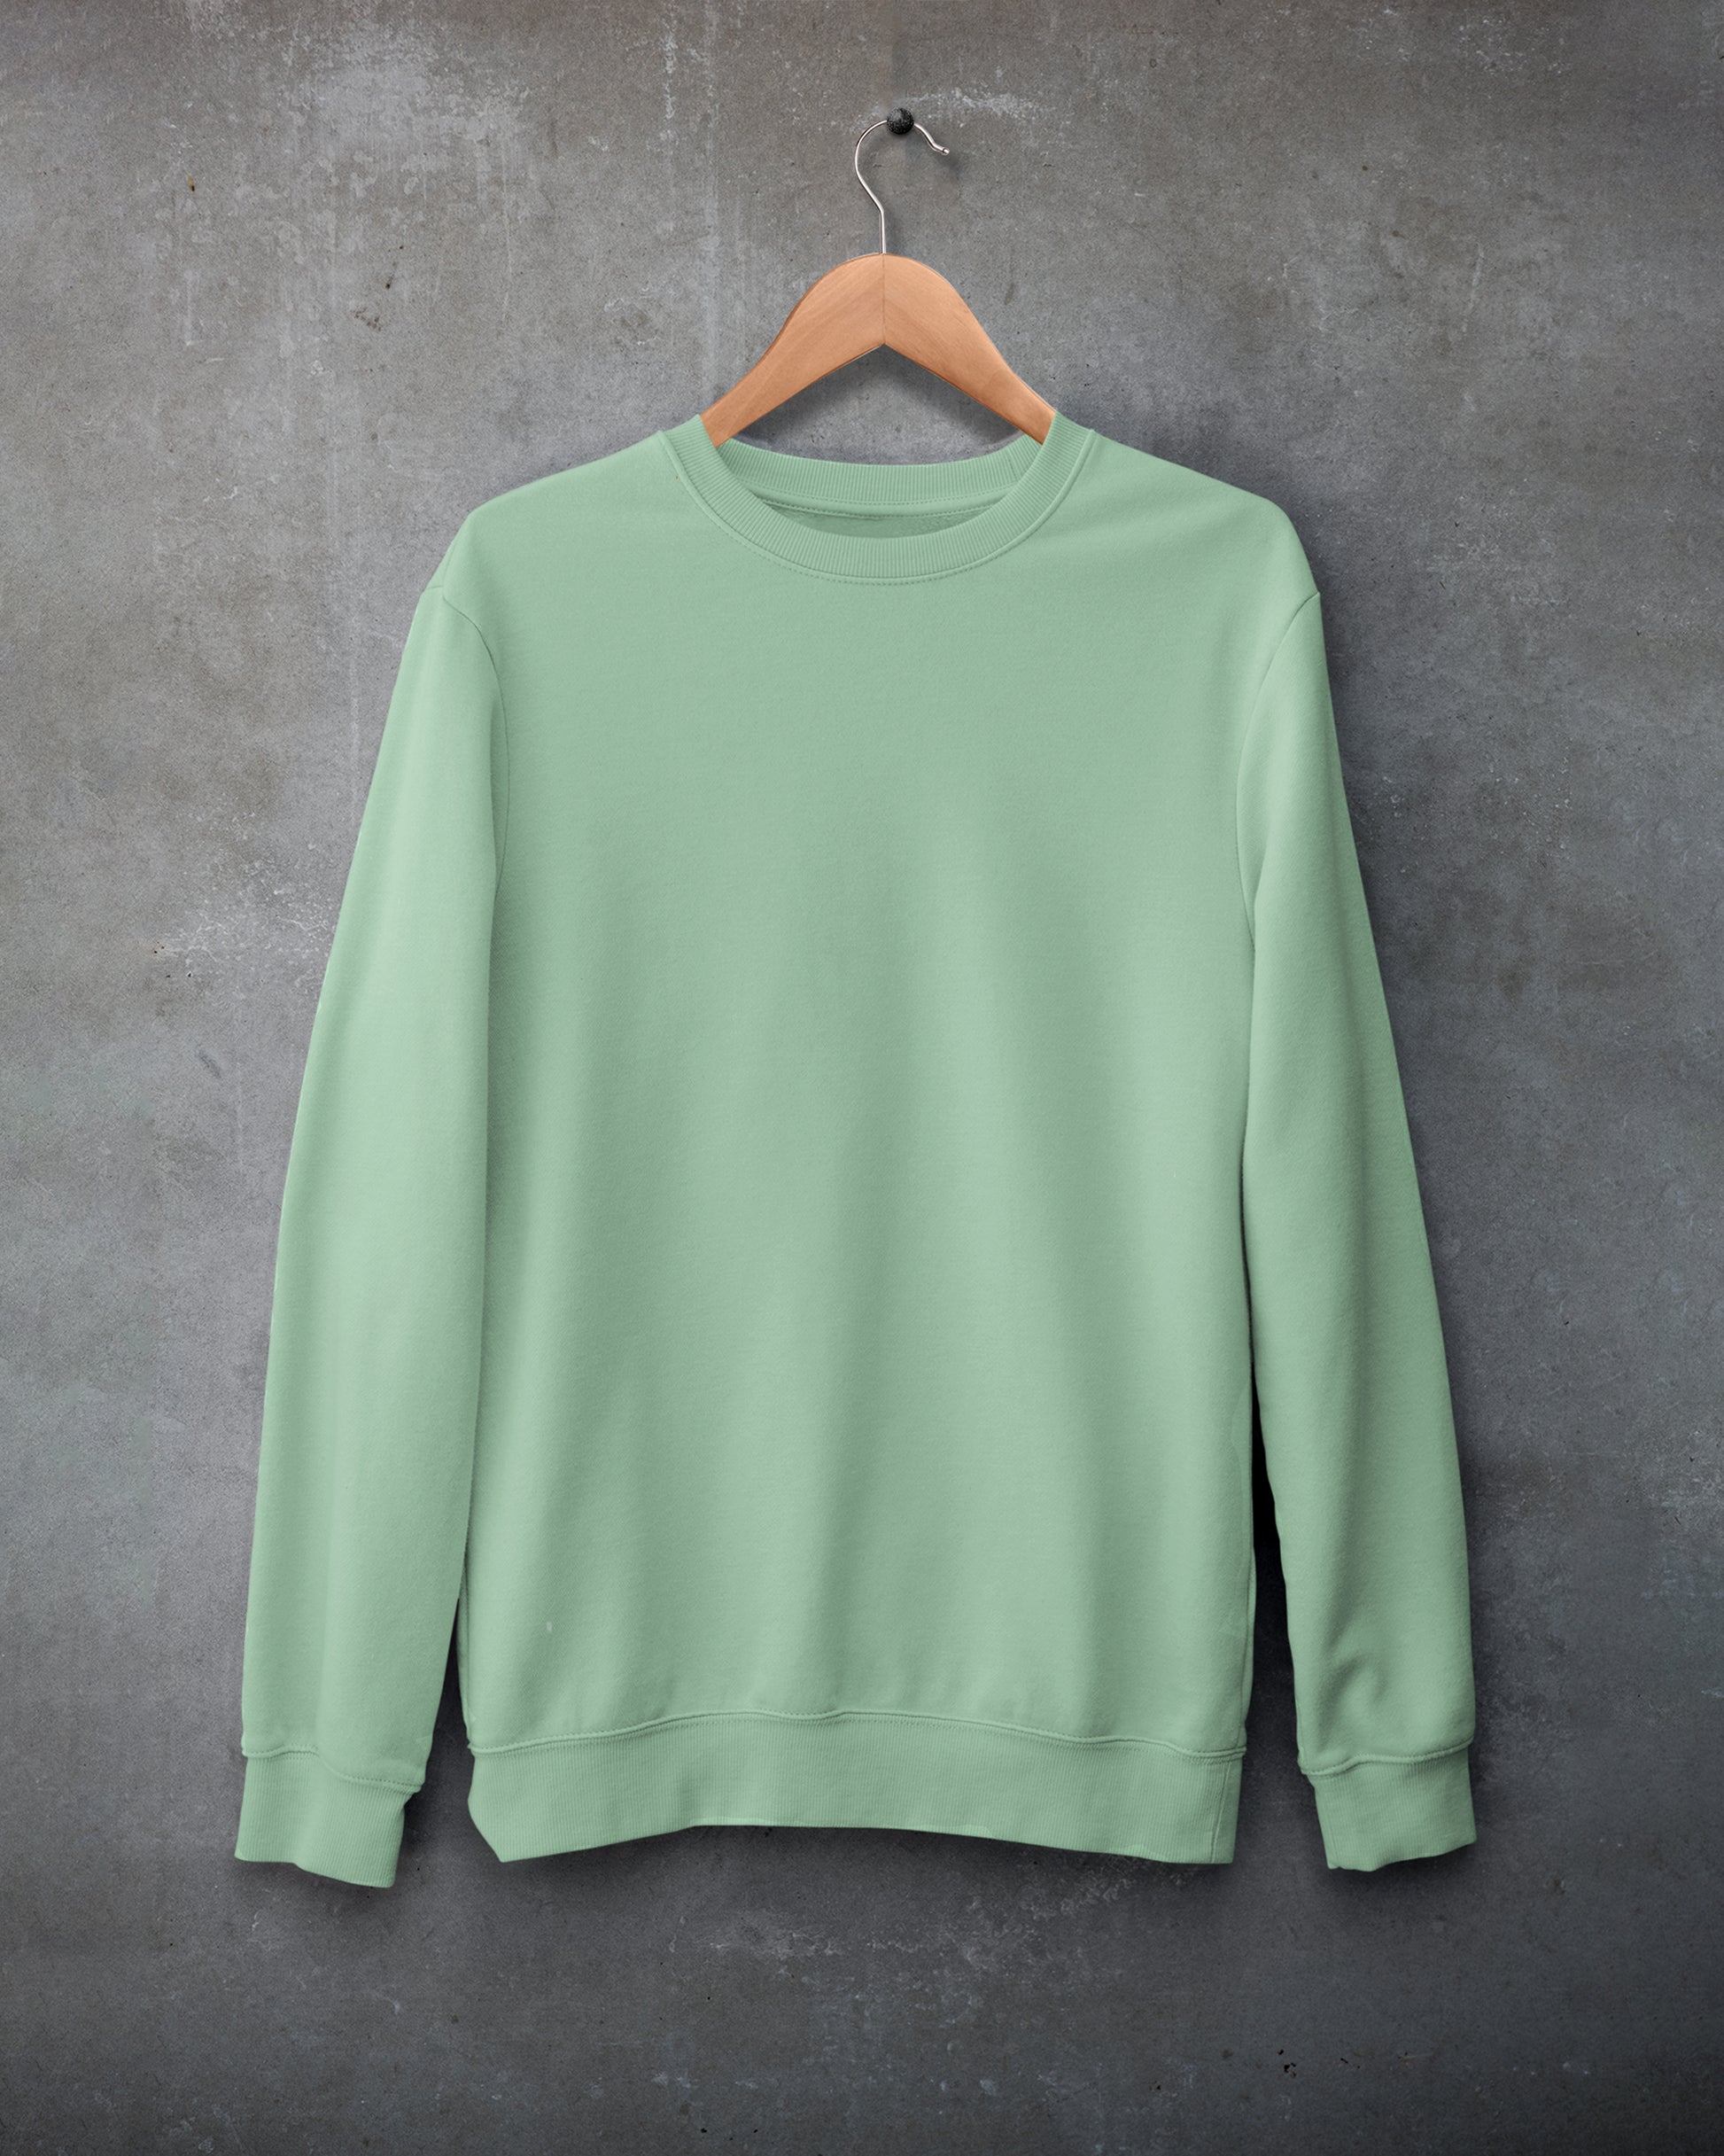 Mint green plain sweatshirts for men and women online - Muselot